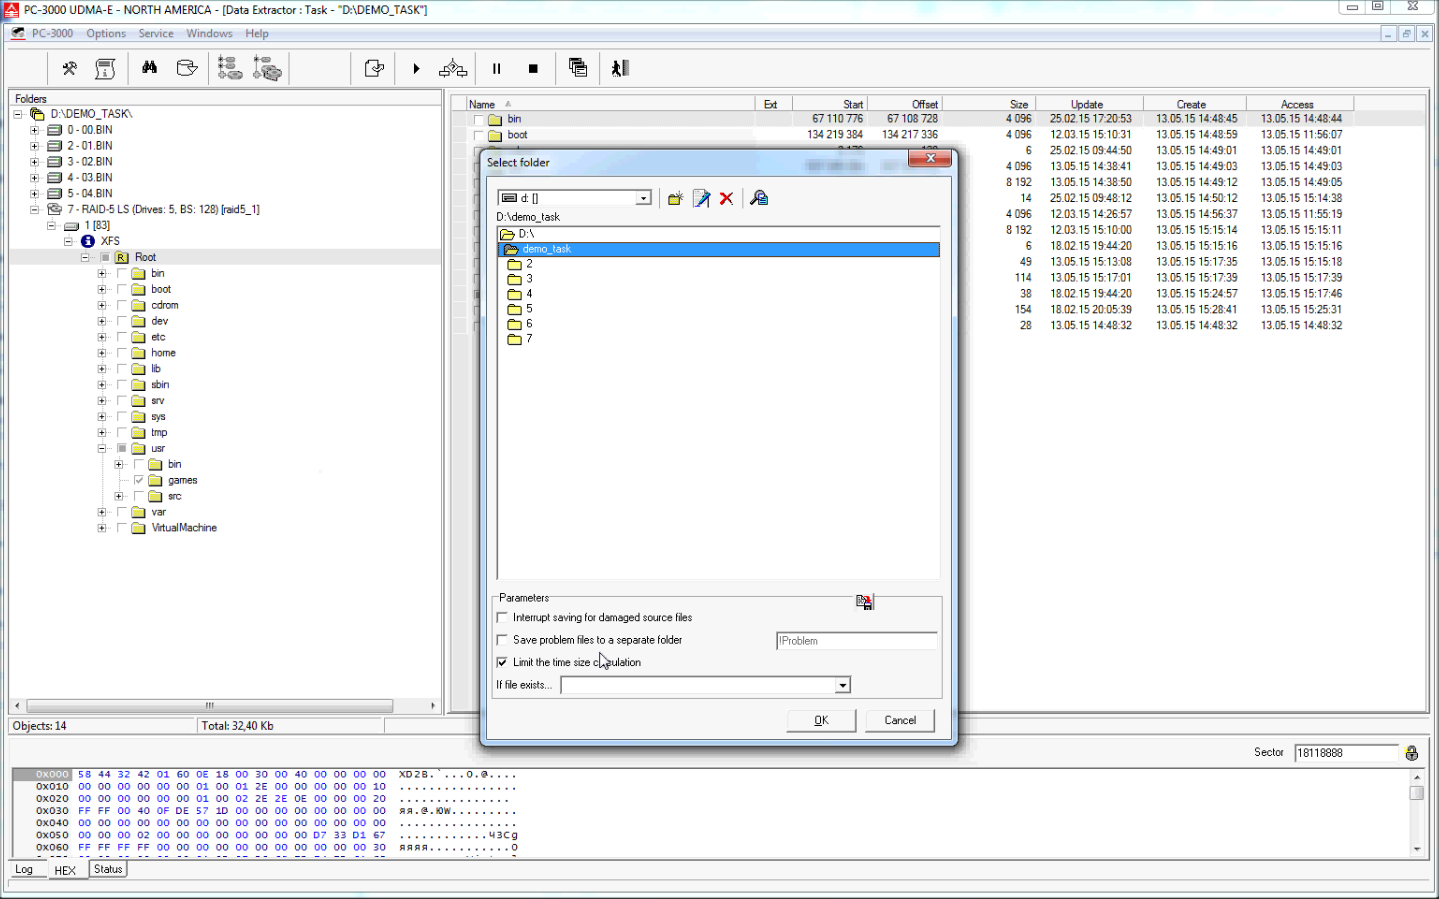 PC-3000 DE. Data Extractor RAID Edition第一个步骤(第1部分-创建Data Extractor RAID Edition任务)